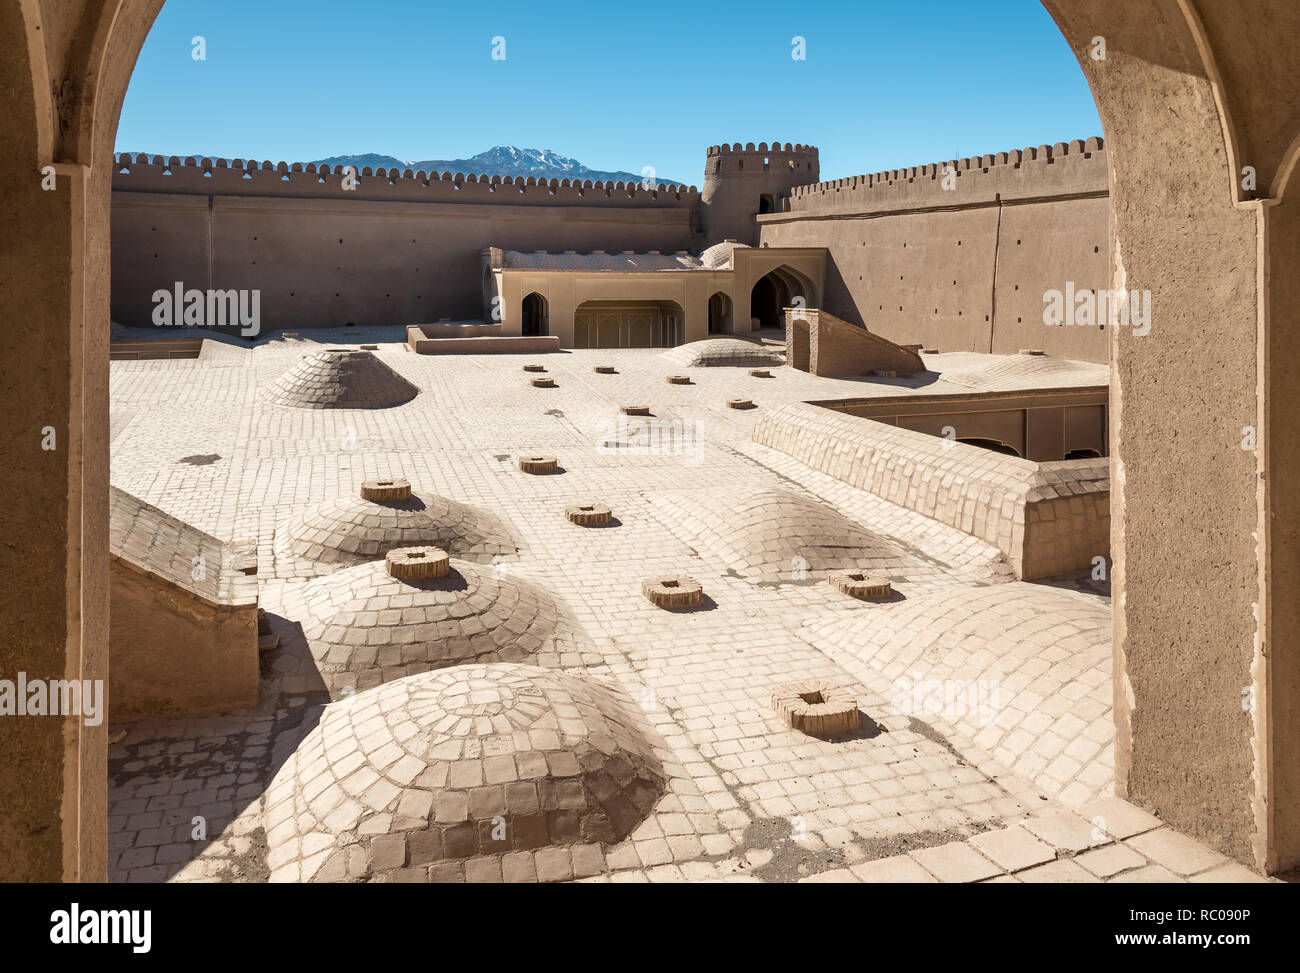 Roof view of an adobe castle Rayen close to the town Kerman under mountain Haraz, Iran Stock Photo